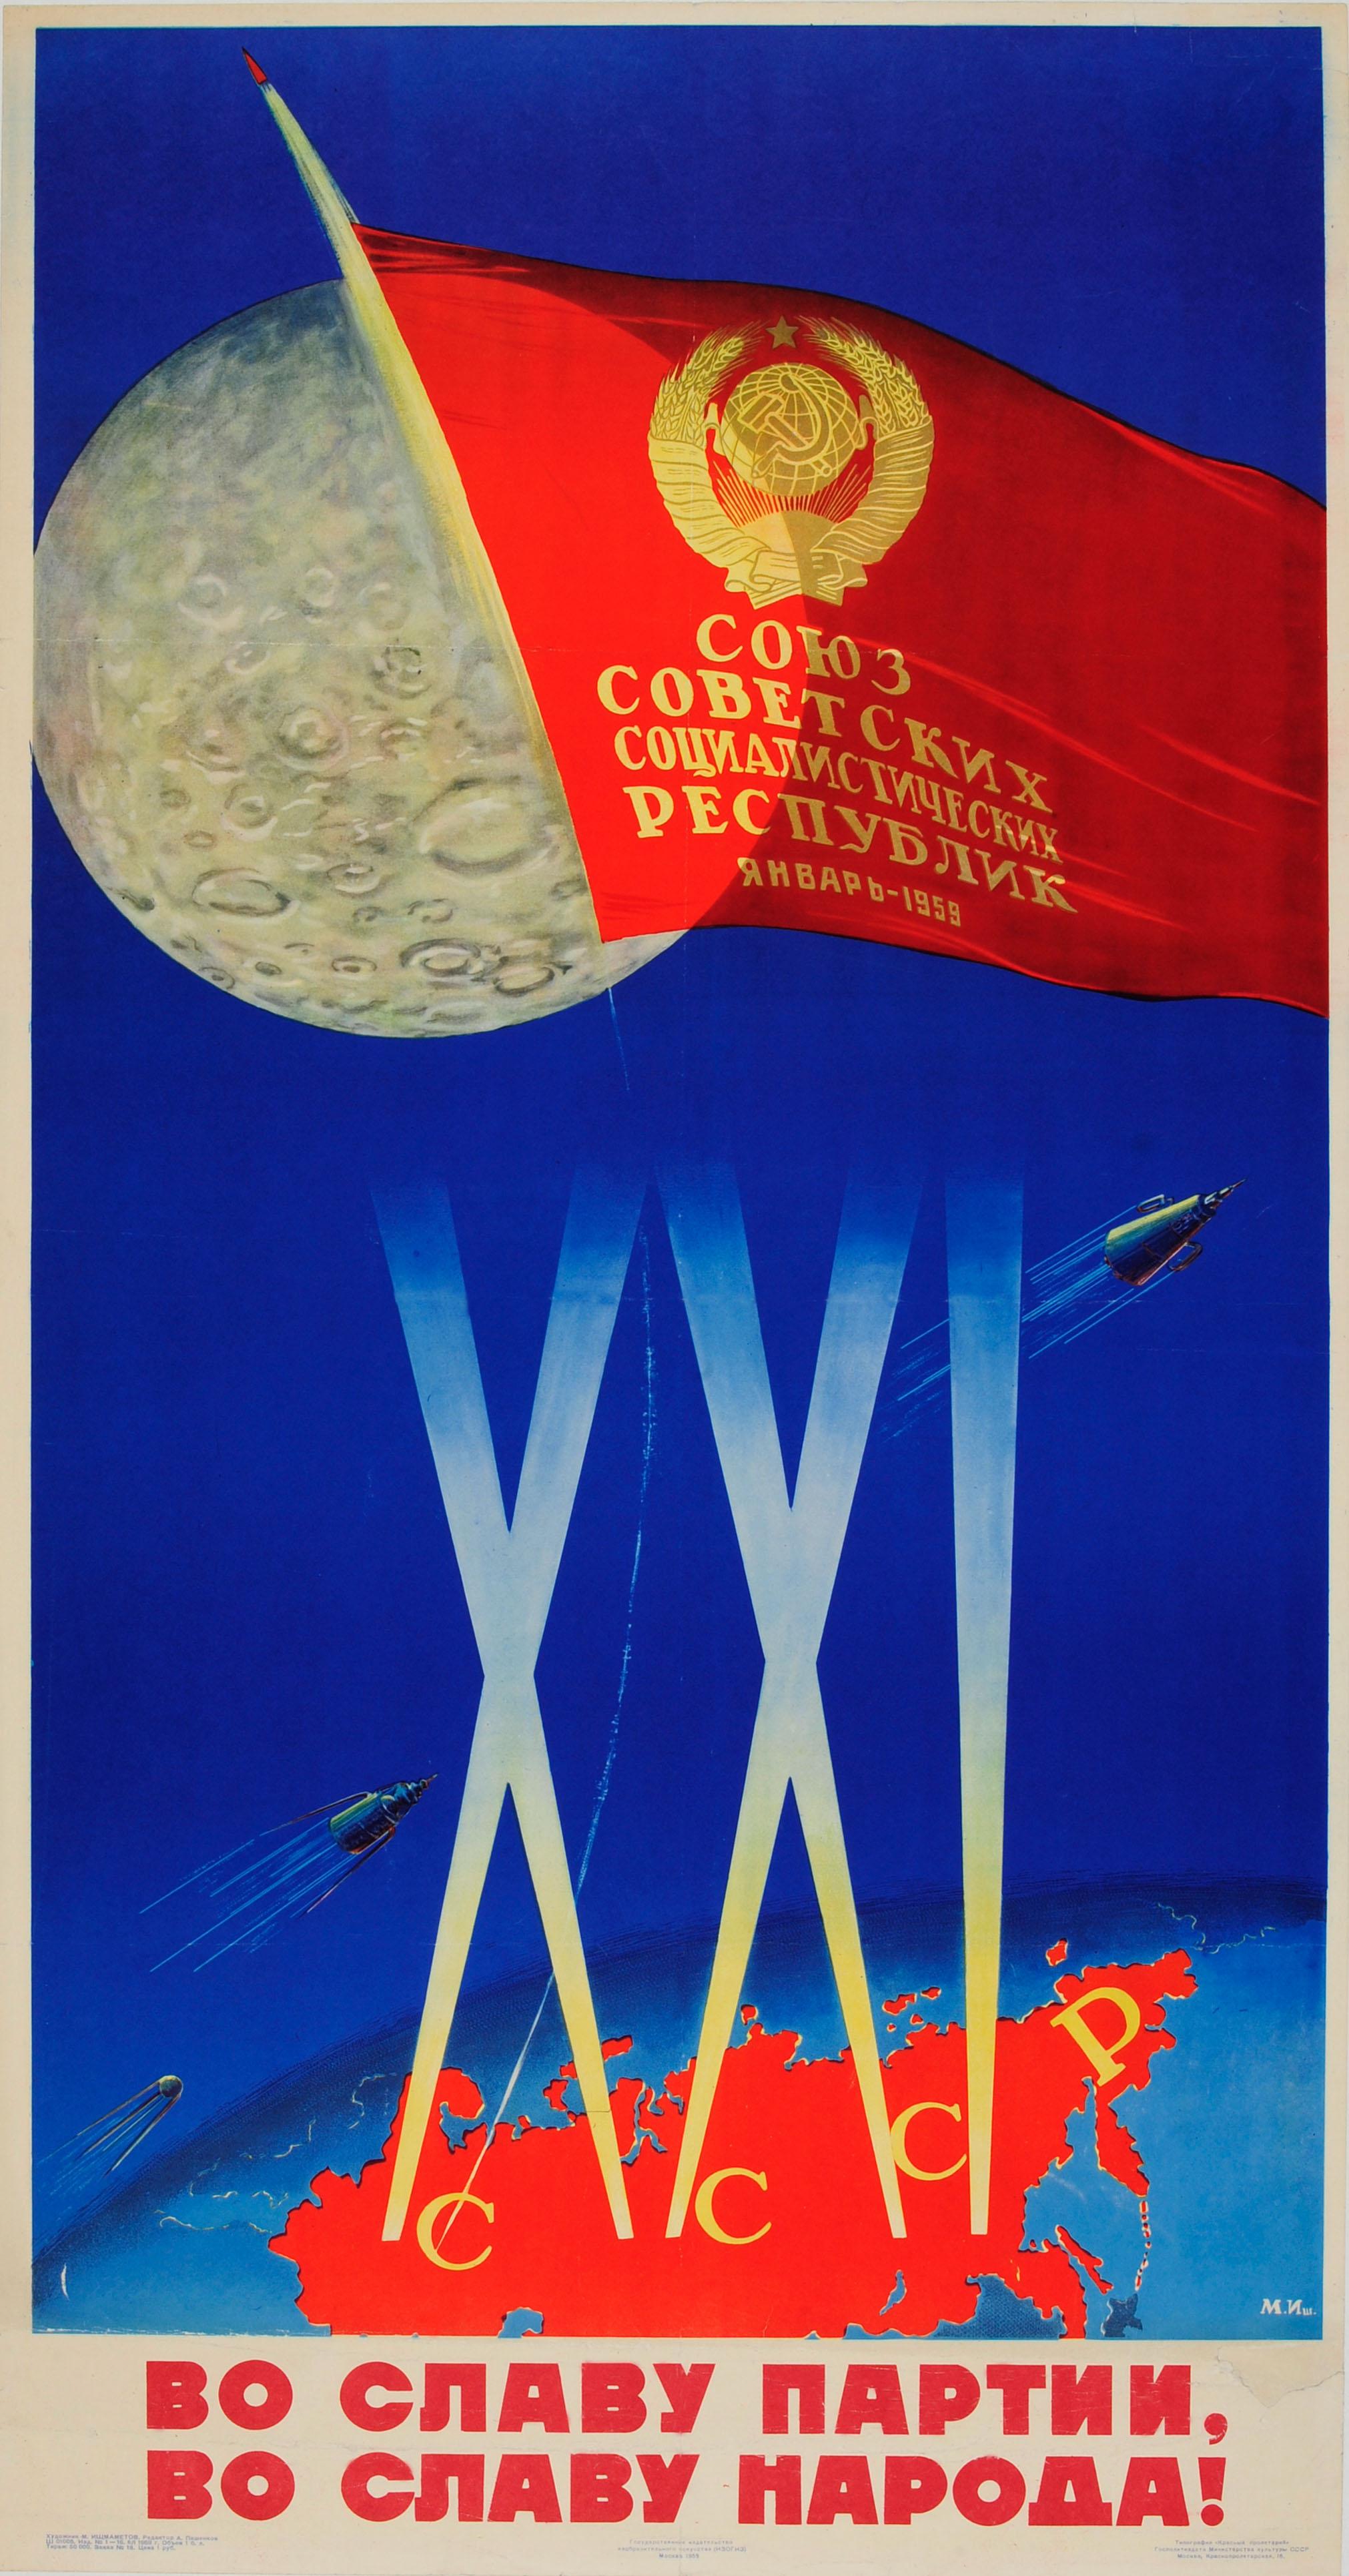 M Ischmametov Print - Original Vintage Soviet Luna Space Race Propaganda Poster USSR CCCP Sputnik Moon